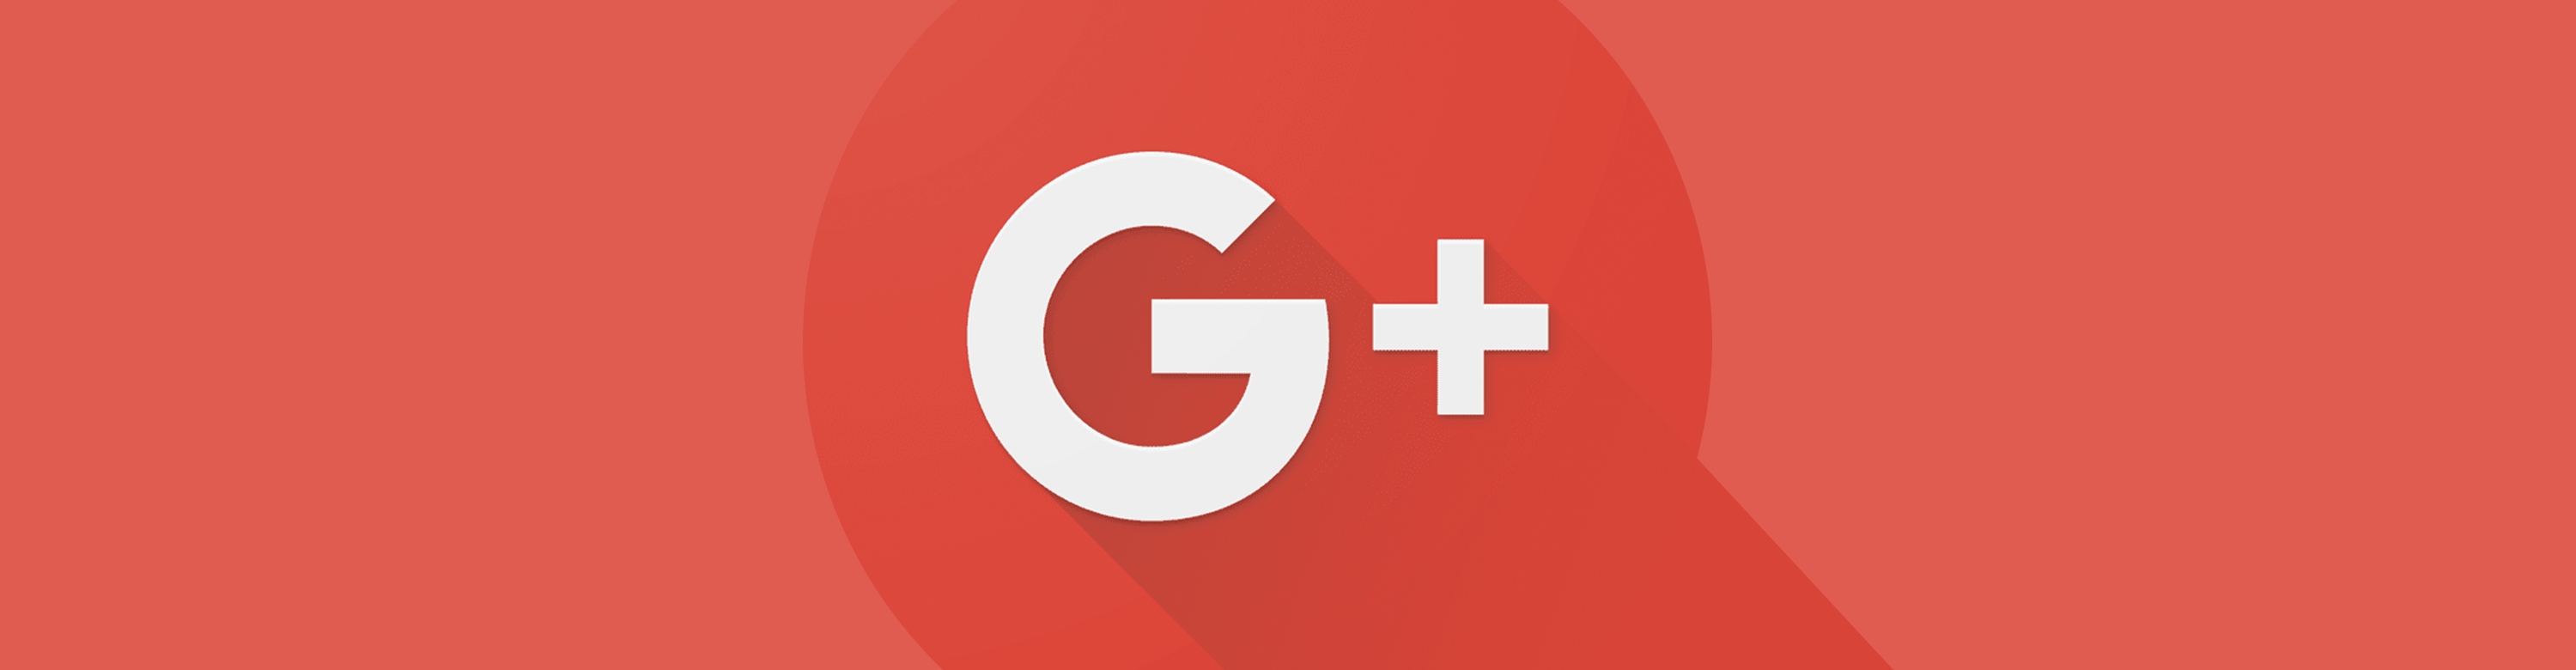 WordPress Plugins Say Goodbye to Google+